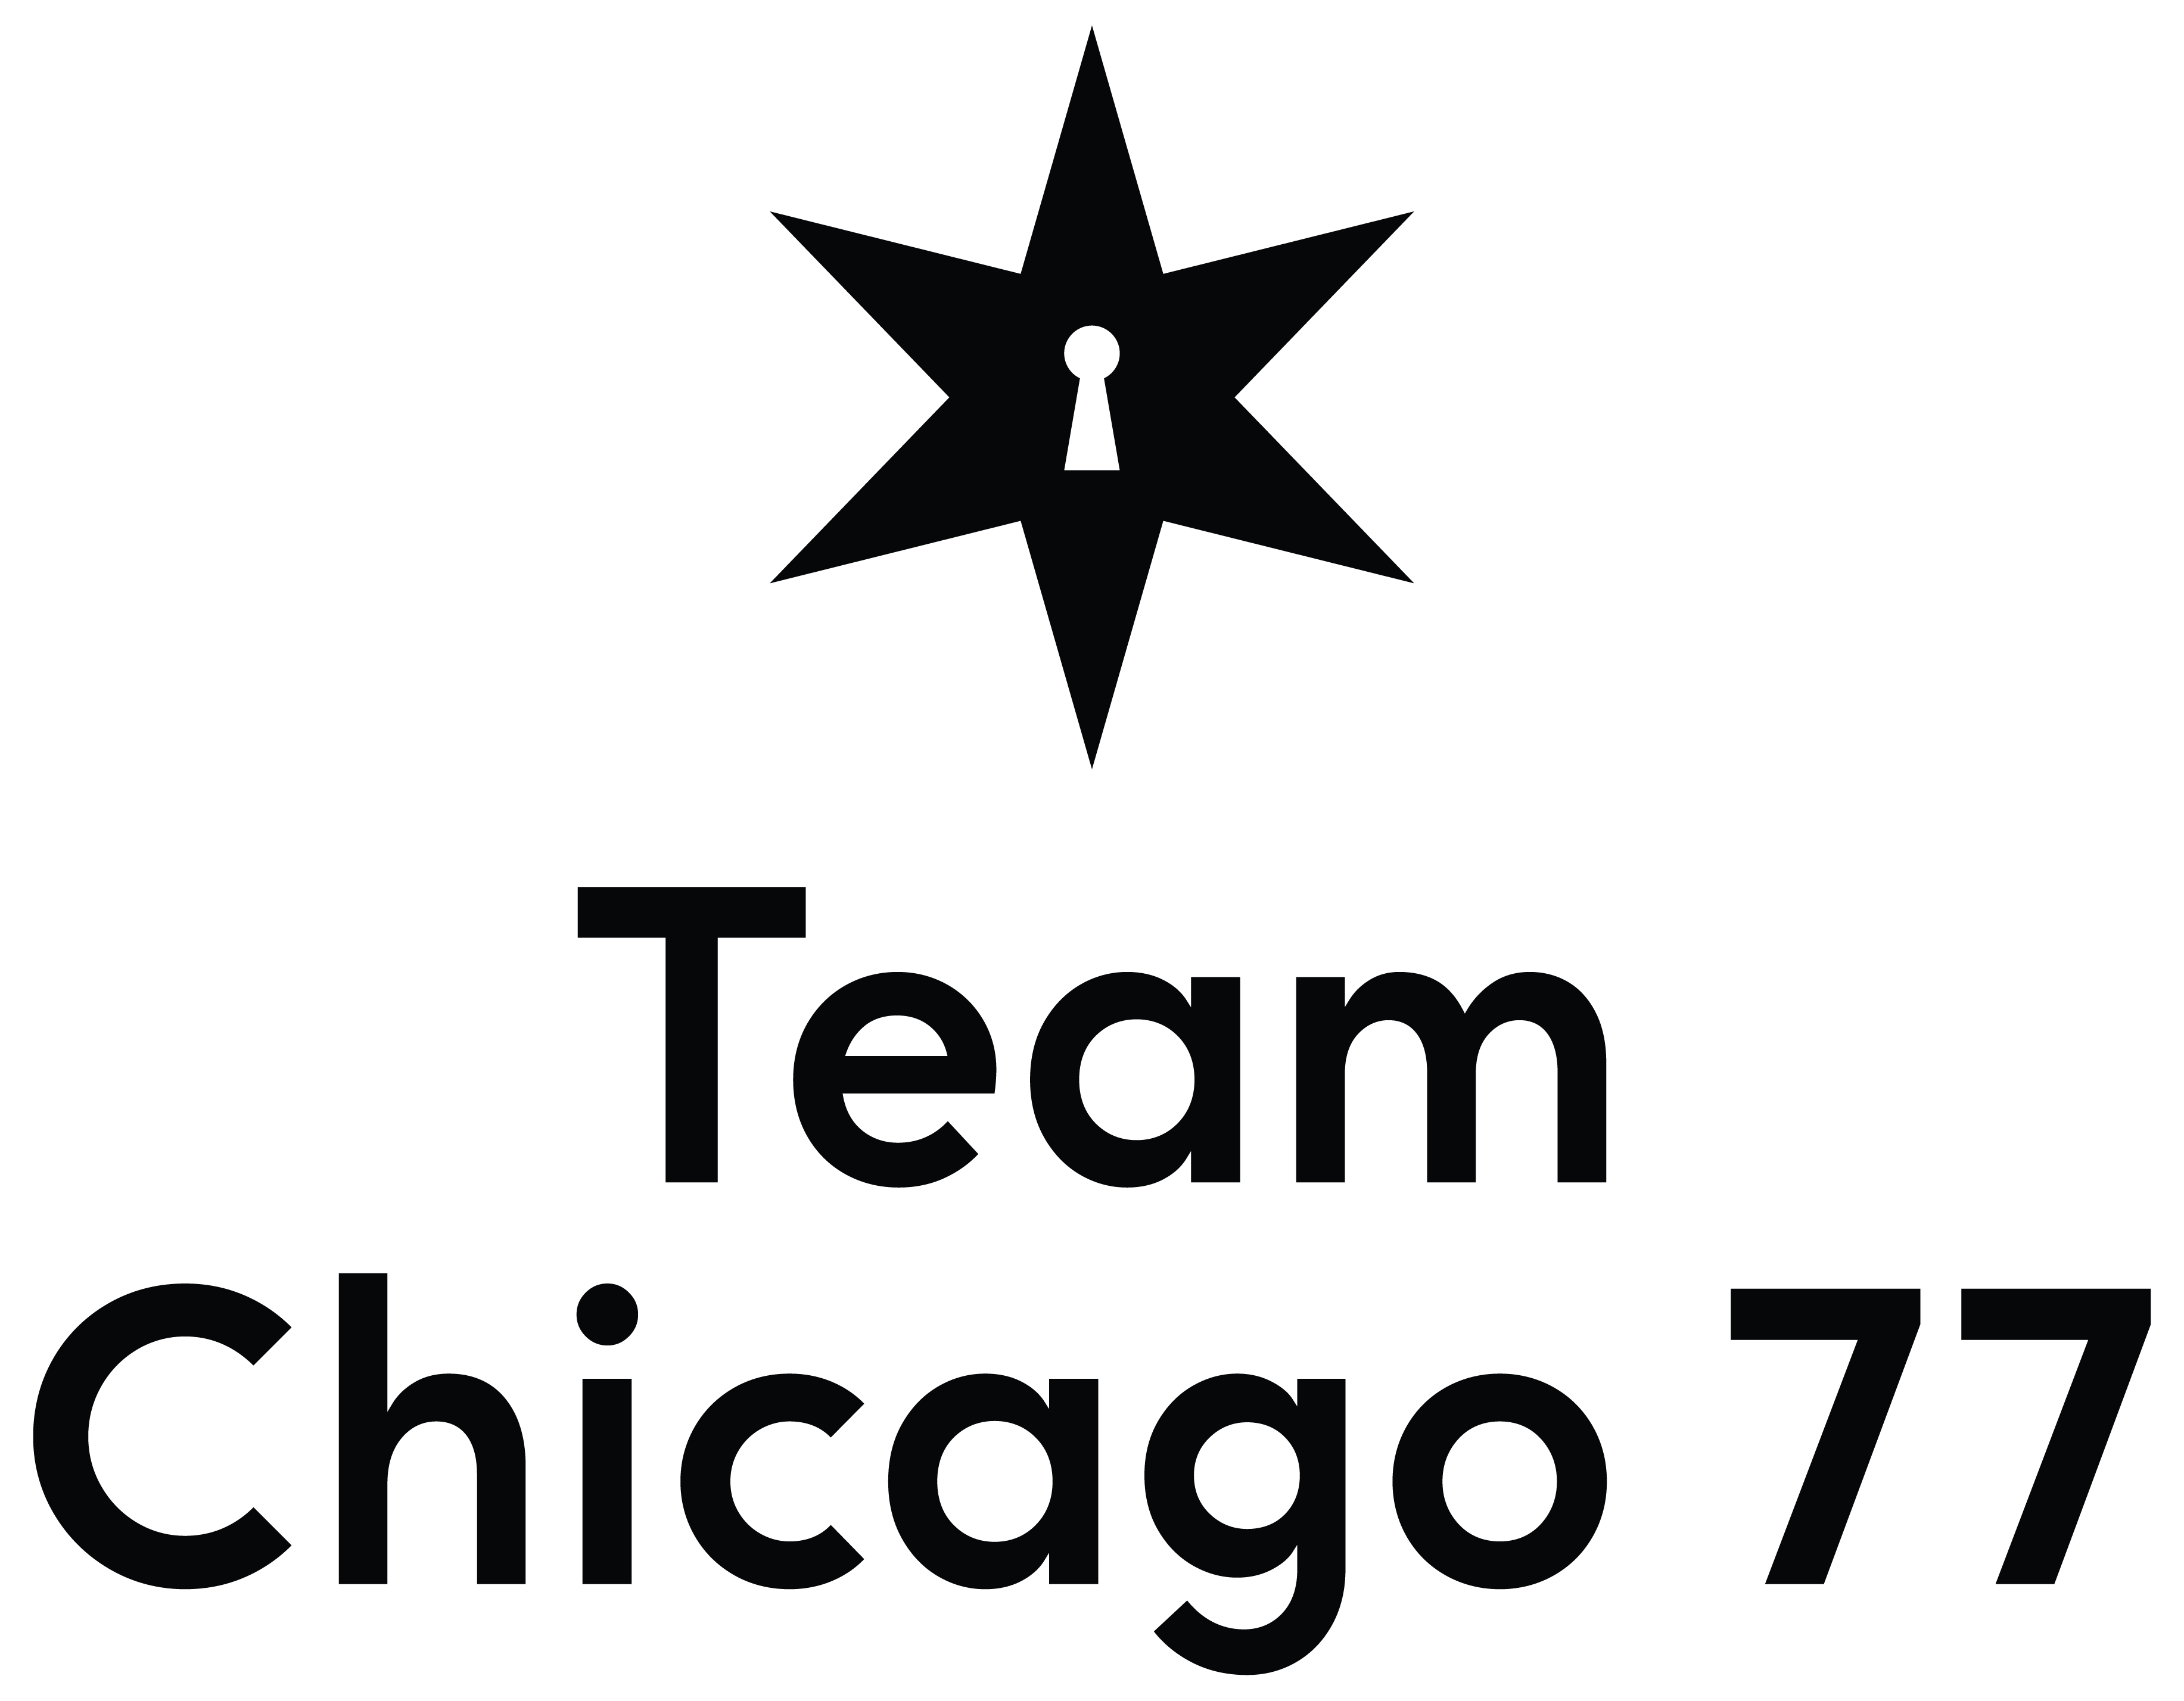 Team Chicago 77